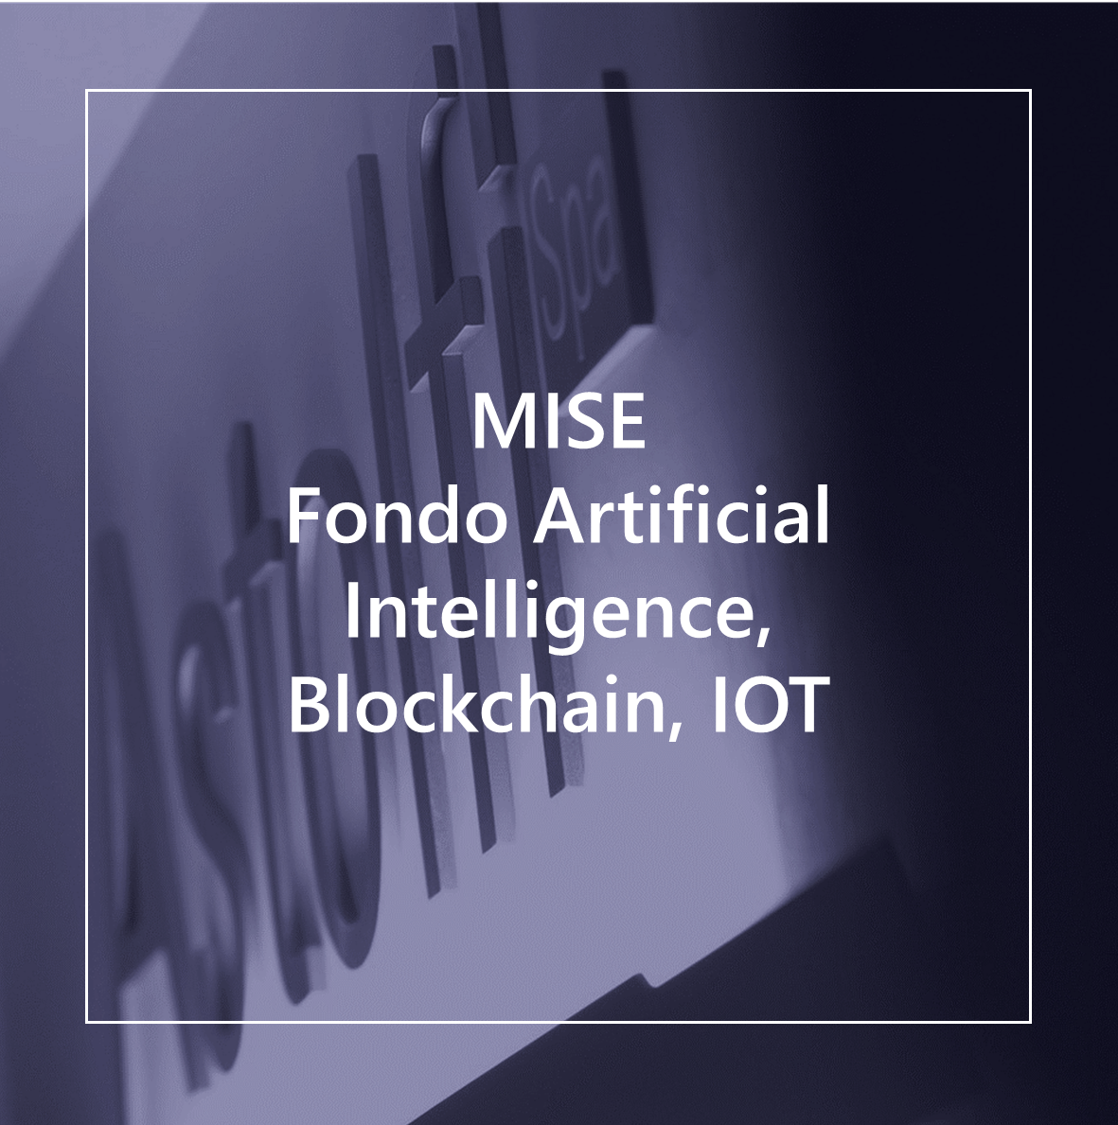 MISE - Fondo Artificial Intelligence, Blockchain, IOT